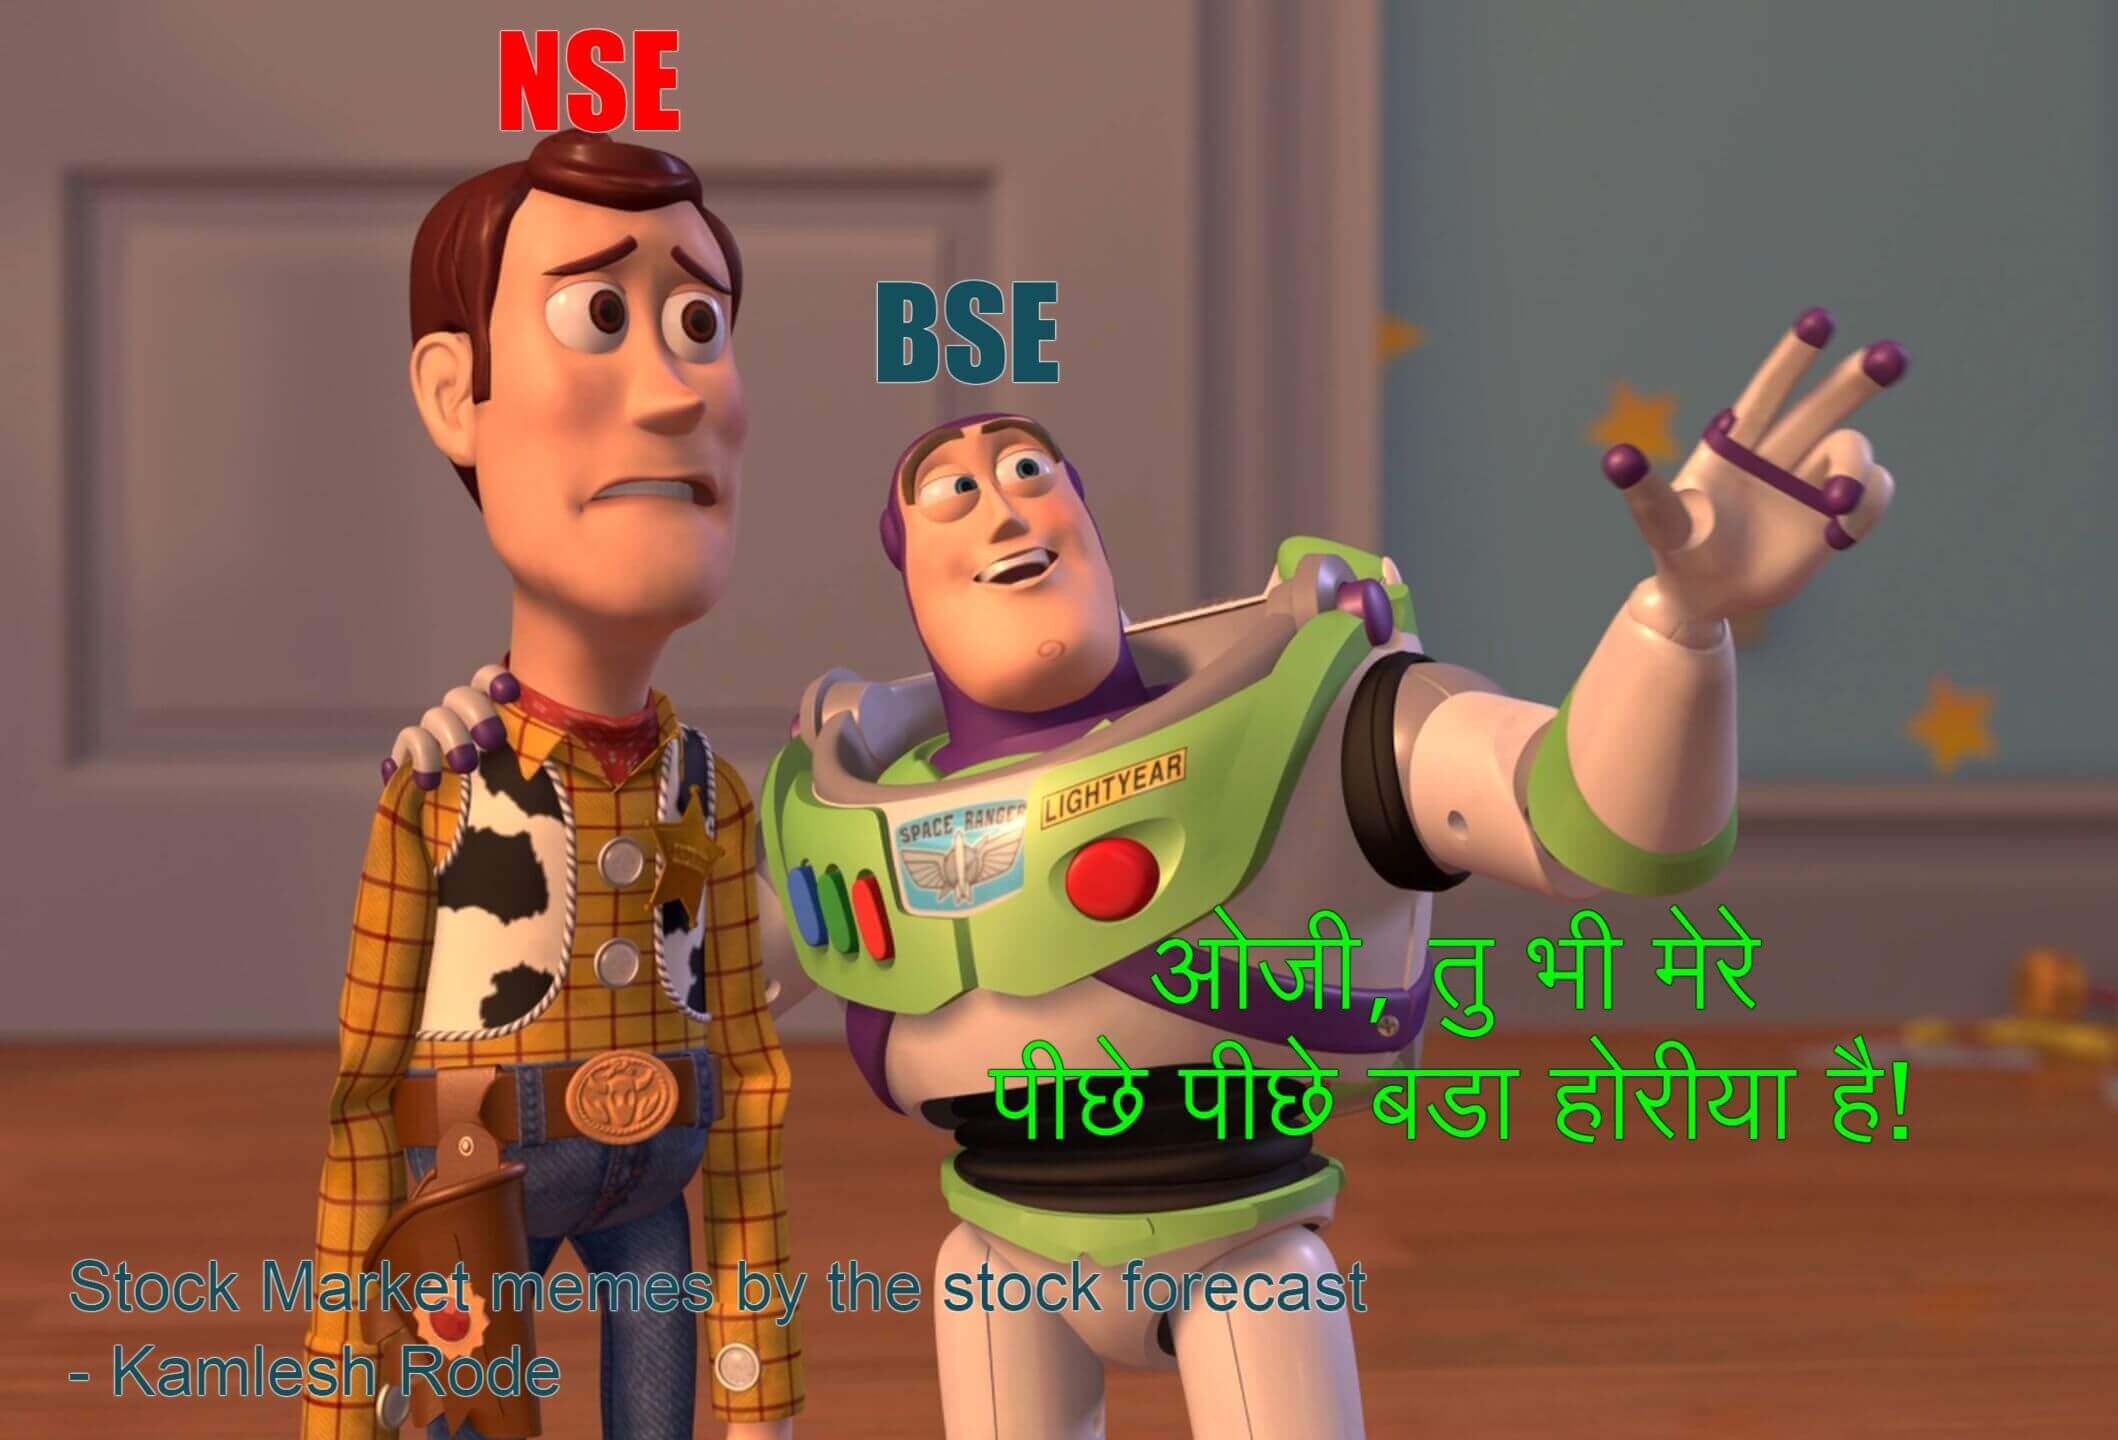 Stock market meme by Kamlesh Rode